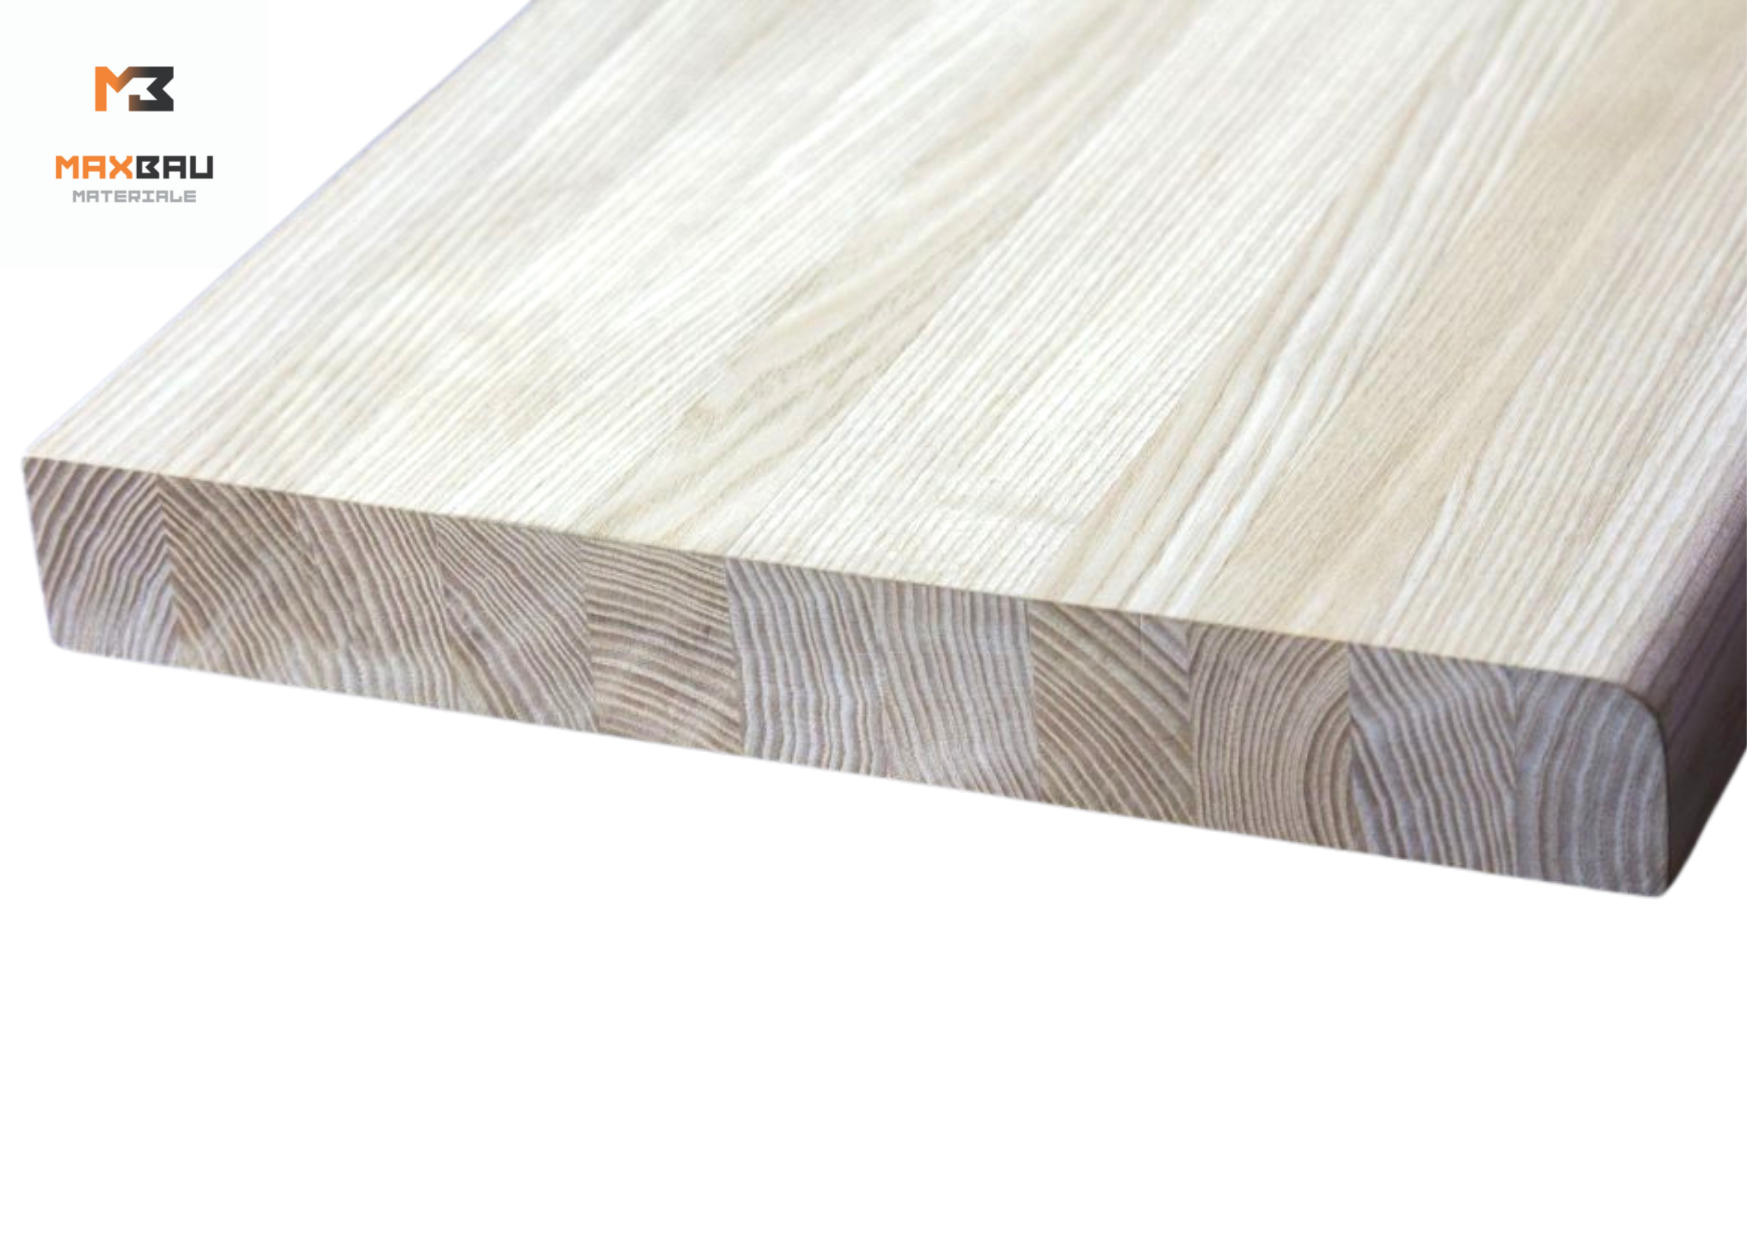 Placi din lemn incleiat - Placa de lemn incleiat MaxBau 2500 x 400 x 28 mm Clasa AB, https:maxbau.ro